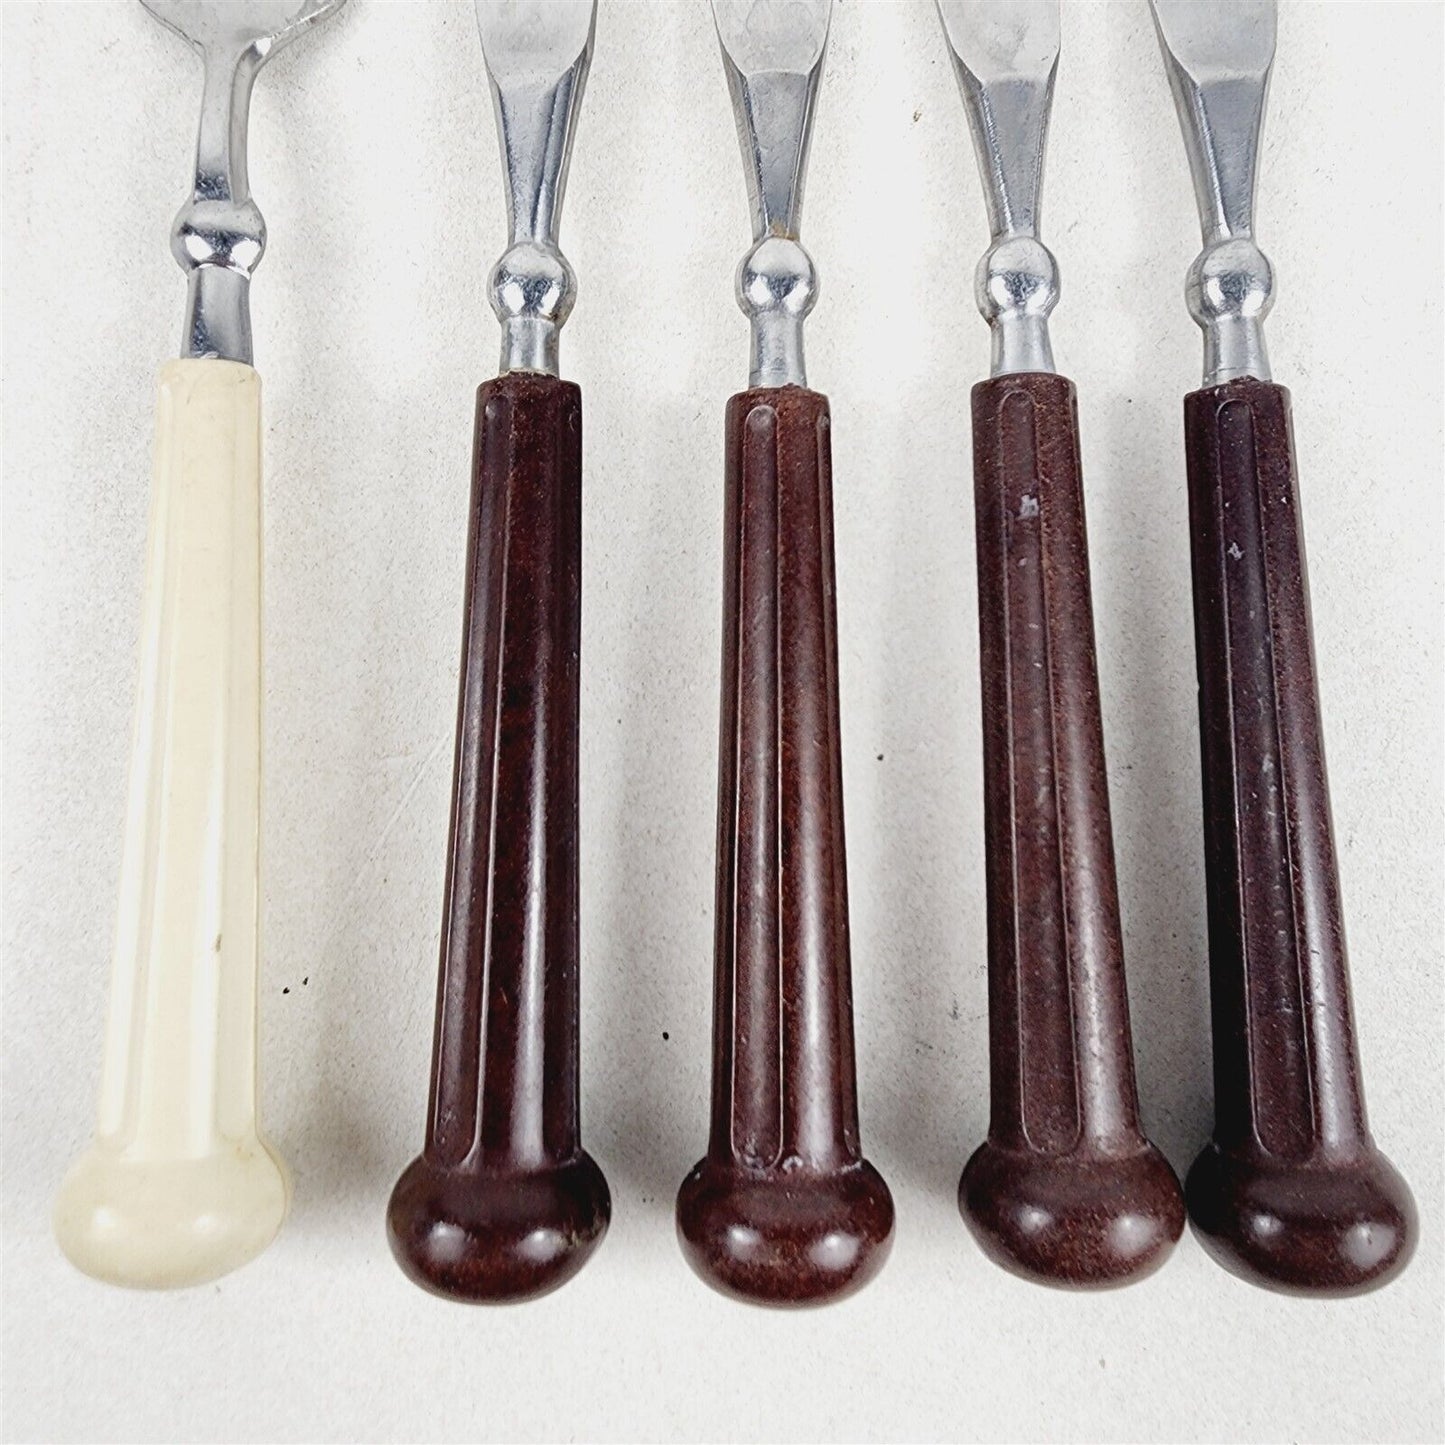 5 Pieces Vintage Oxford Hall Flatware Brown Cream Knife Fork Plastic Handle